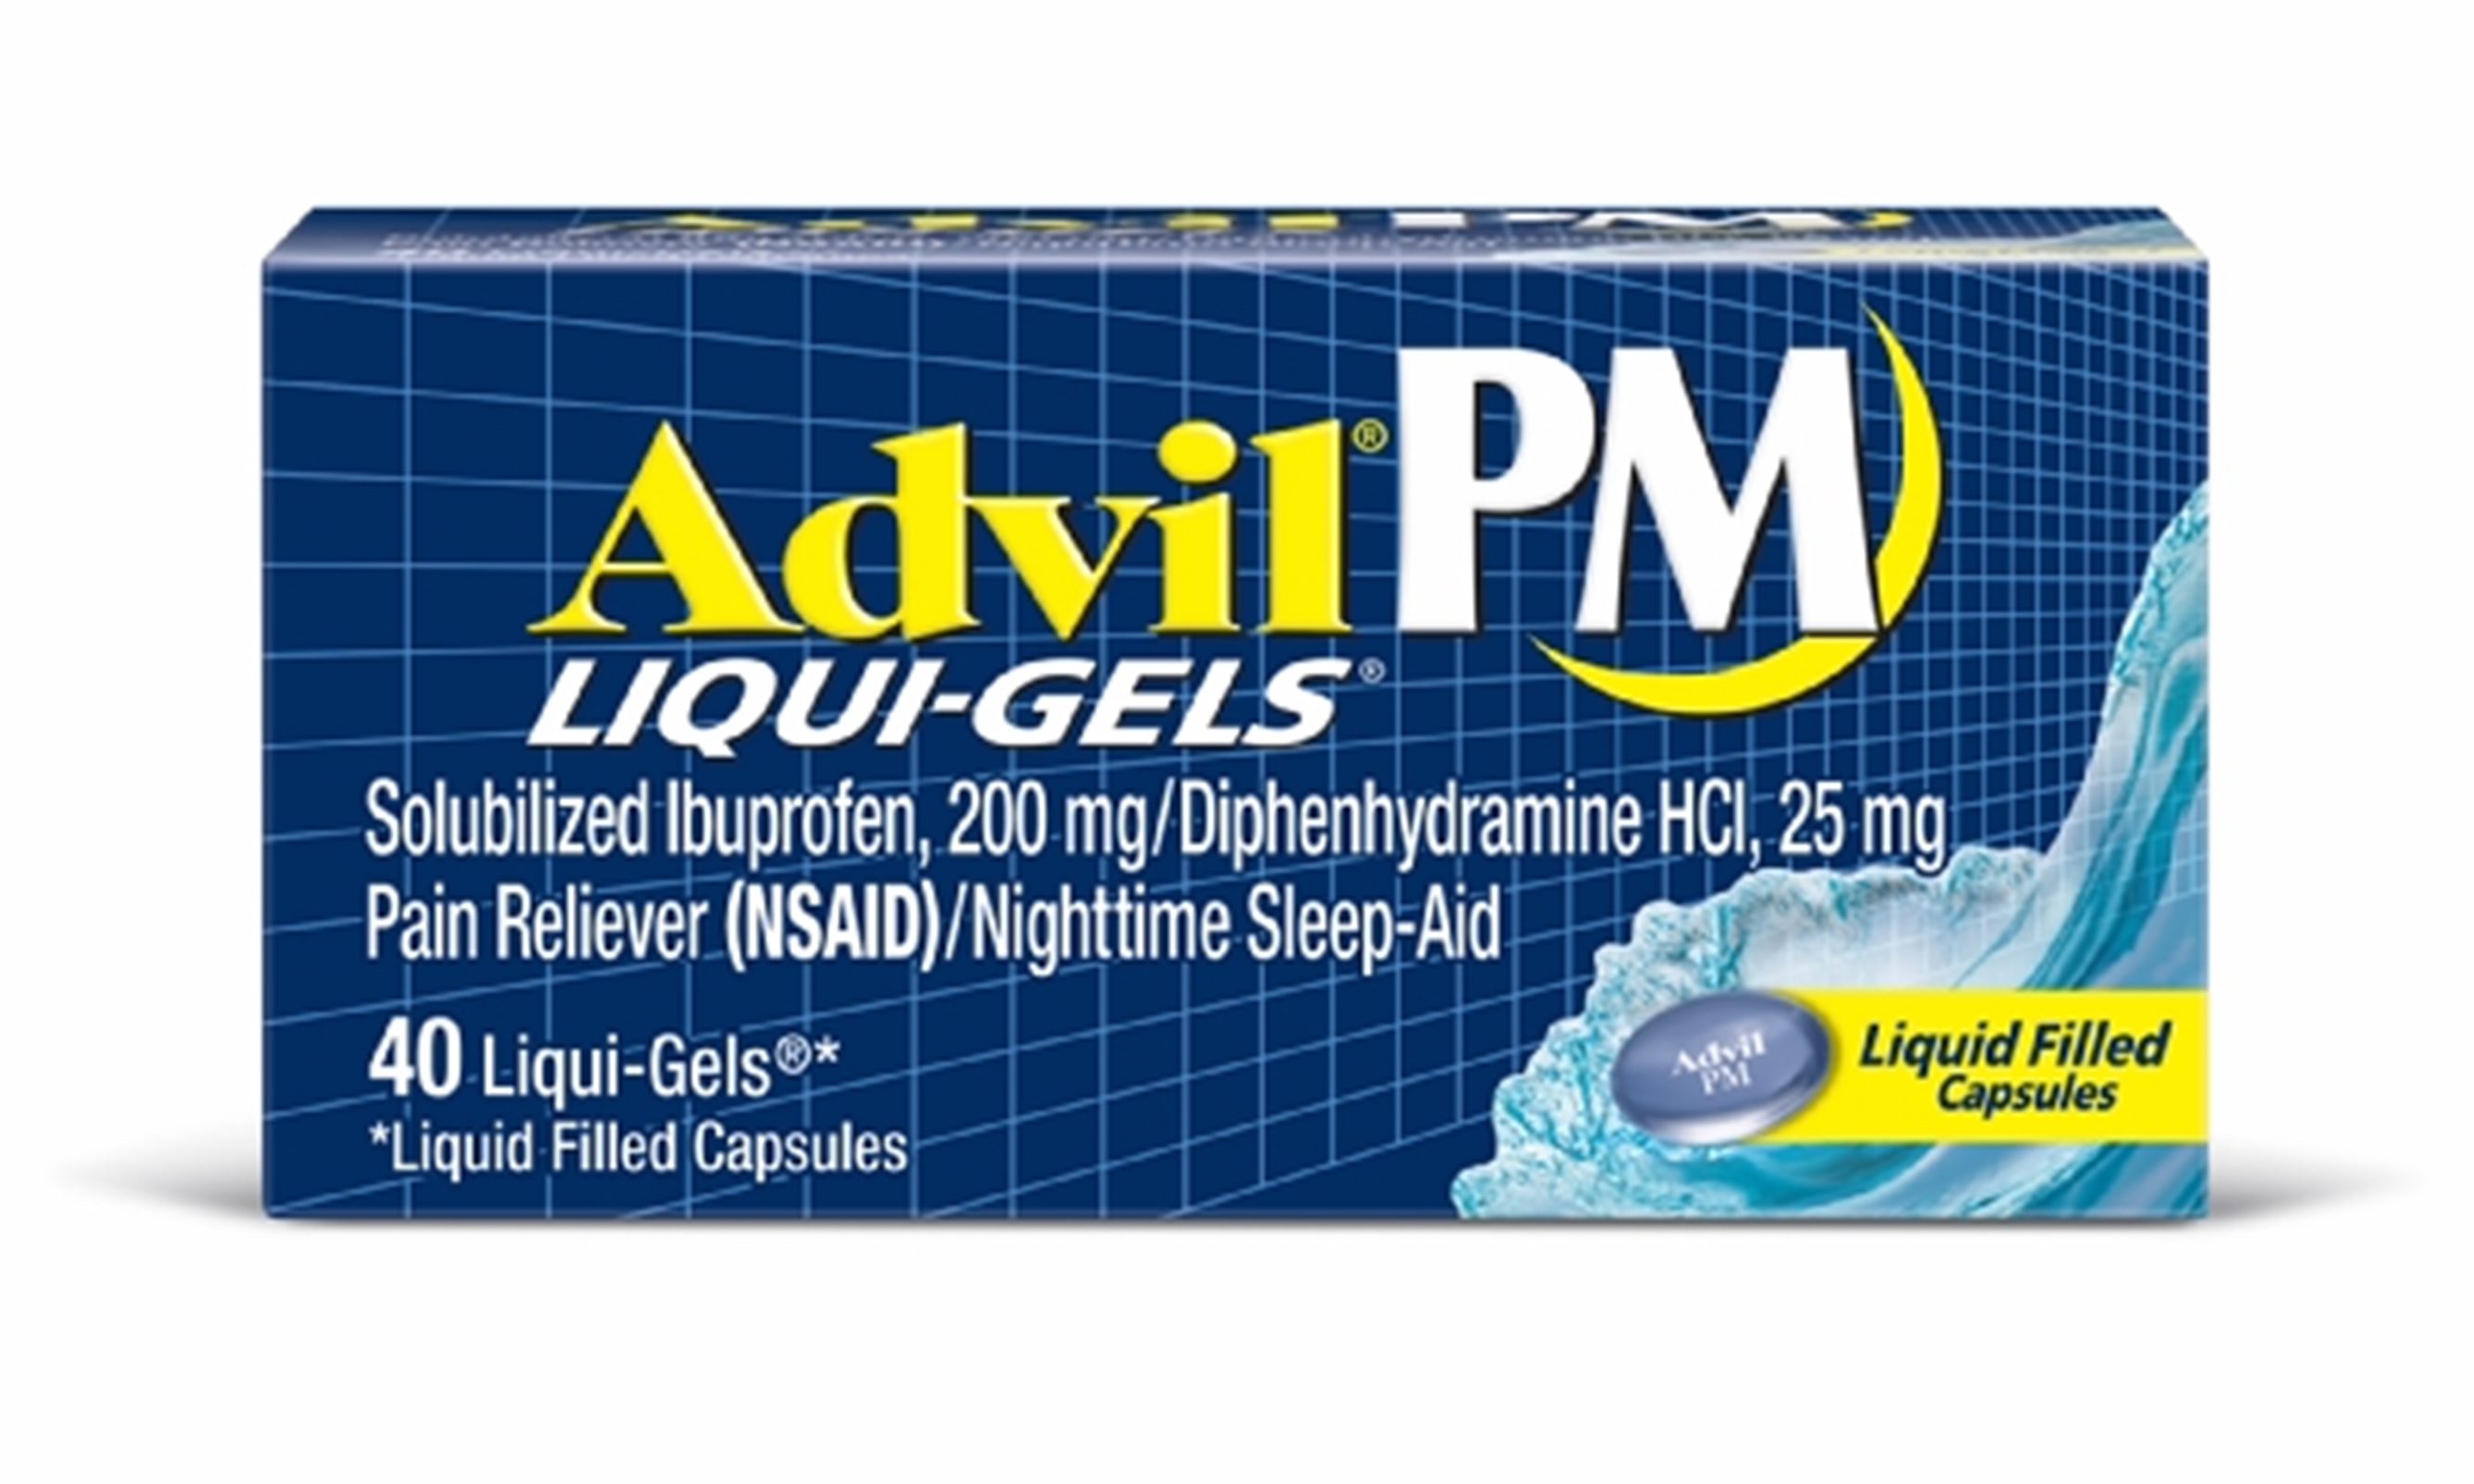 PM Liqui-Gels Ibuprofen Pain Reliever (NSAID)/Nighttime Sleep-Aid Liquid Filled Capsules  40 ct.